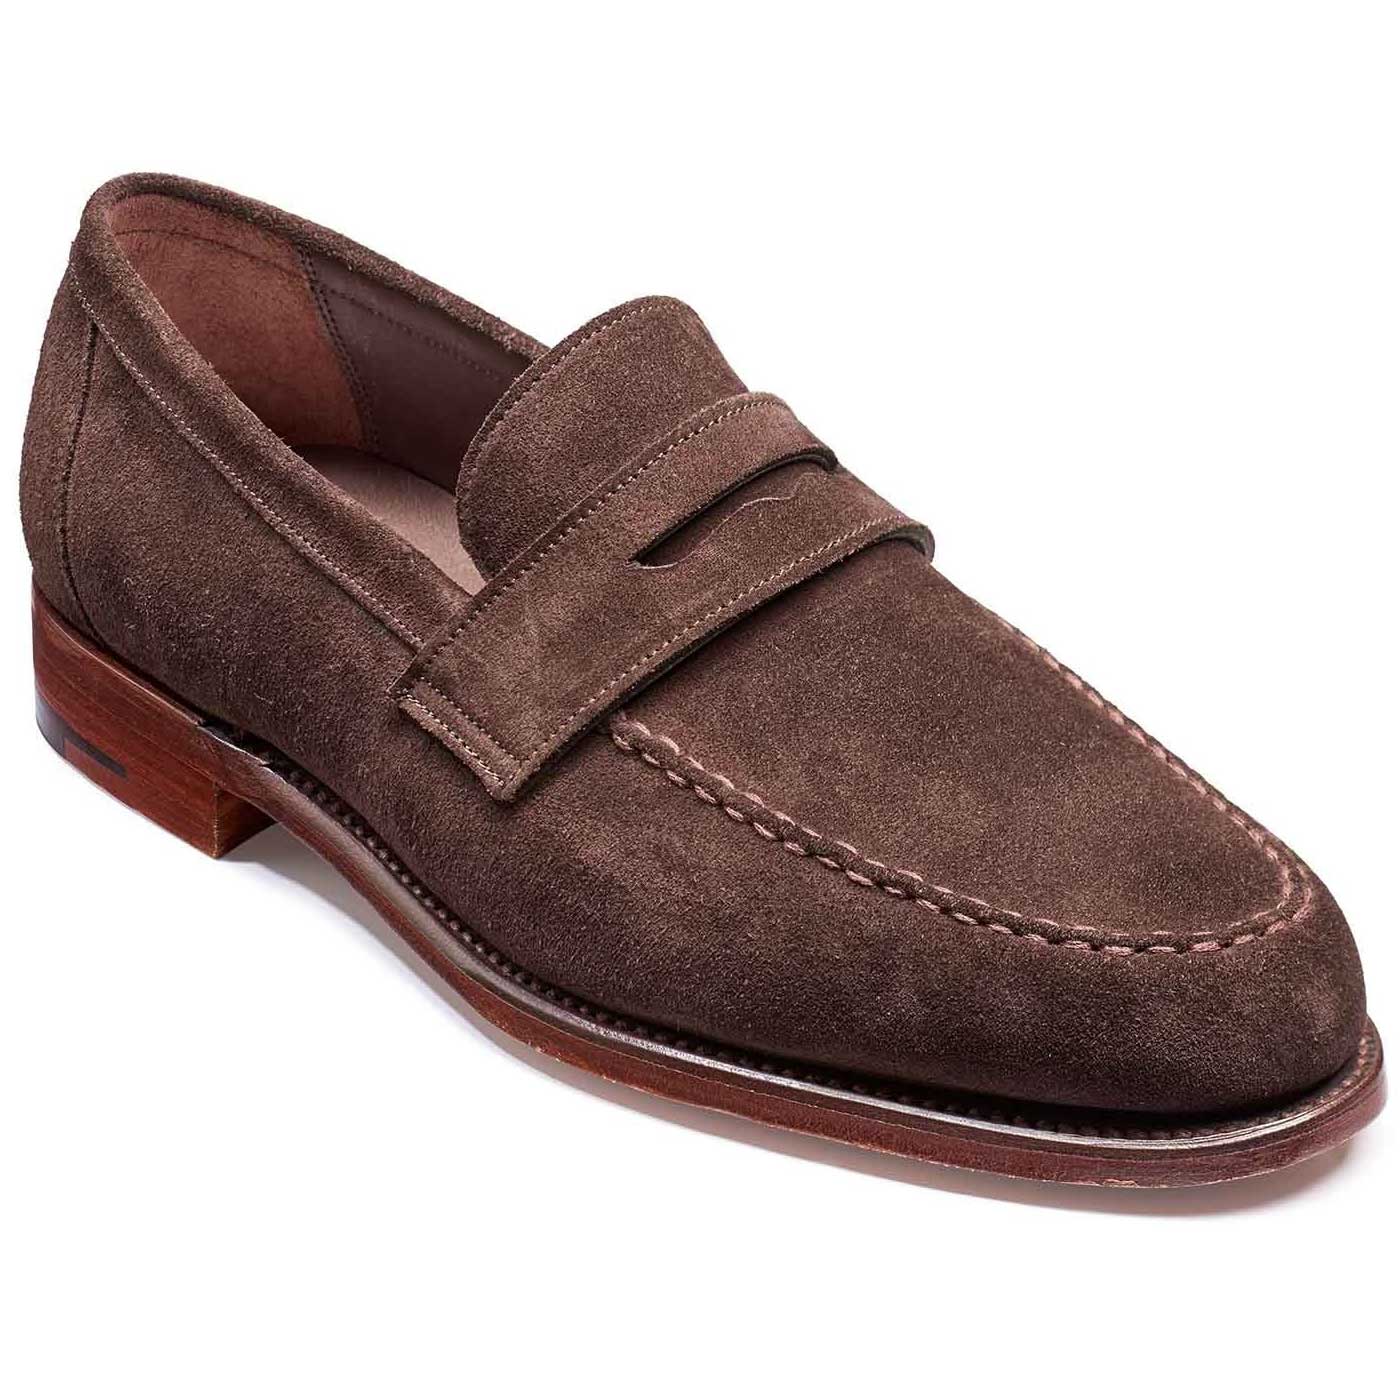 Barker Shoes - Mens Jevington Loafers - Brown Suede